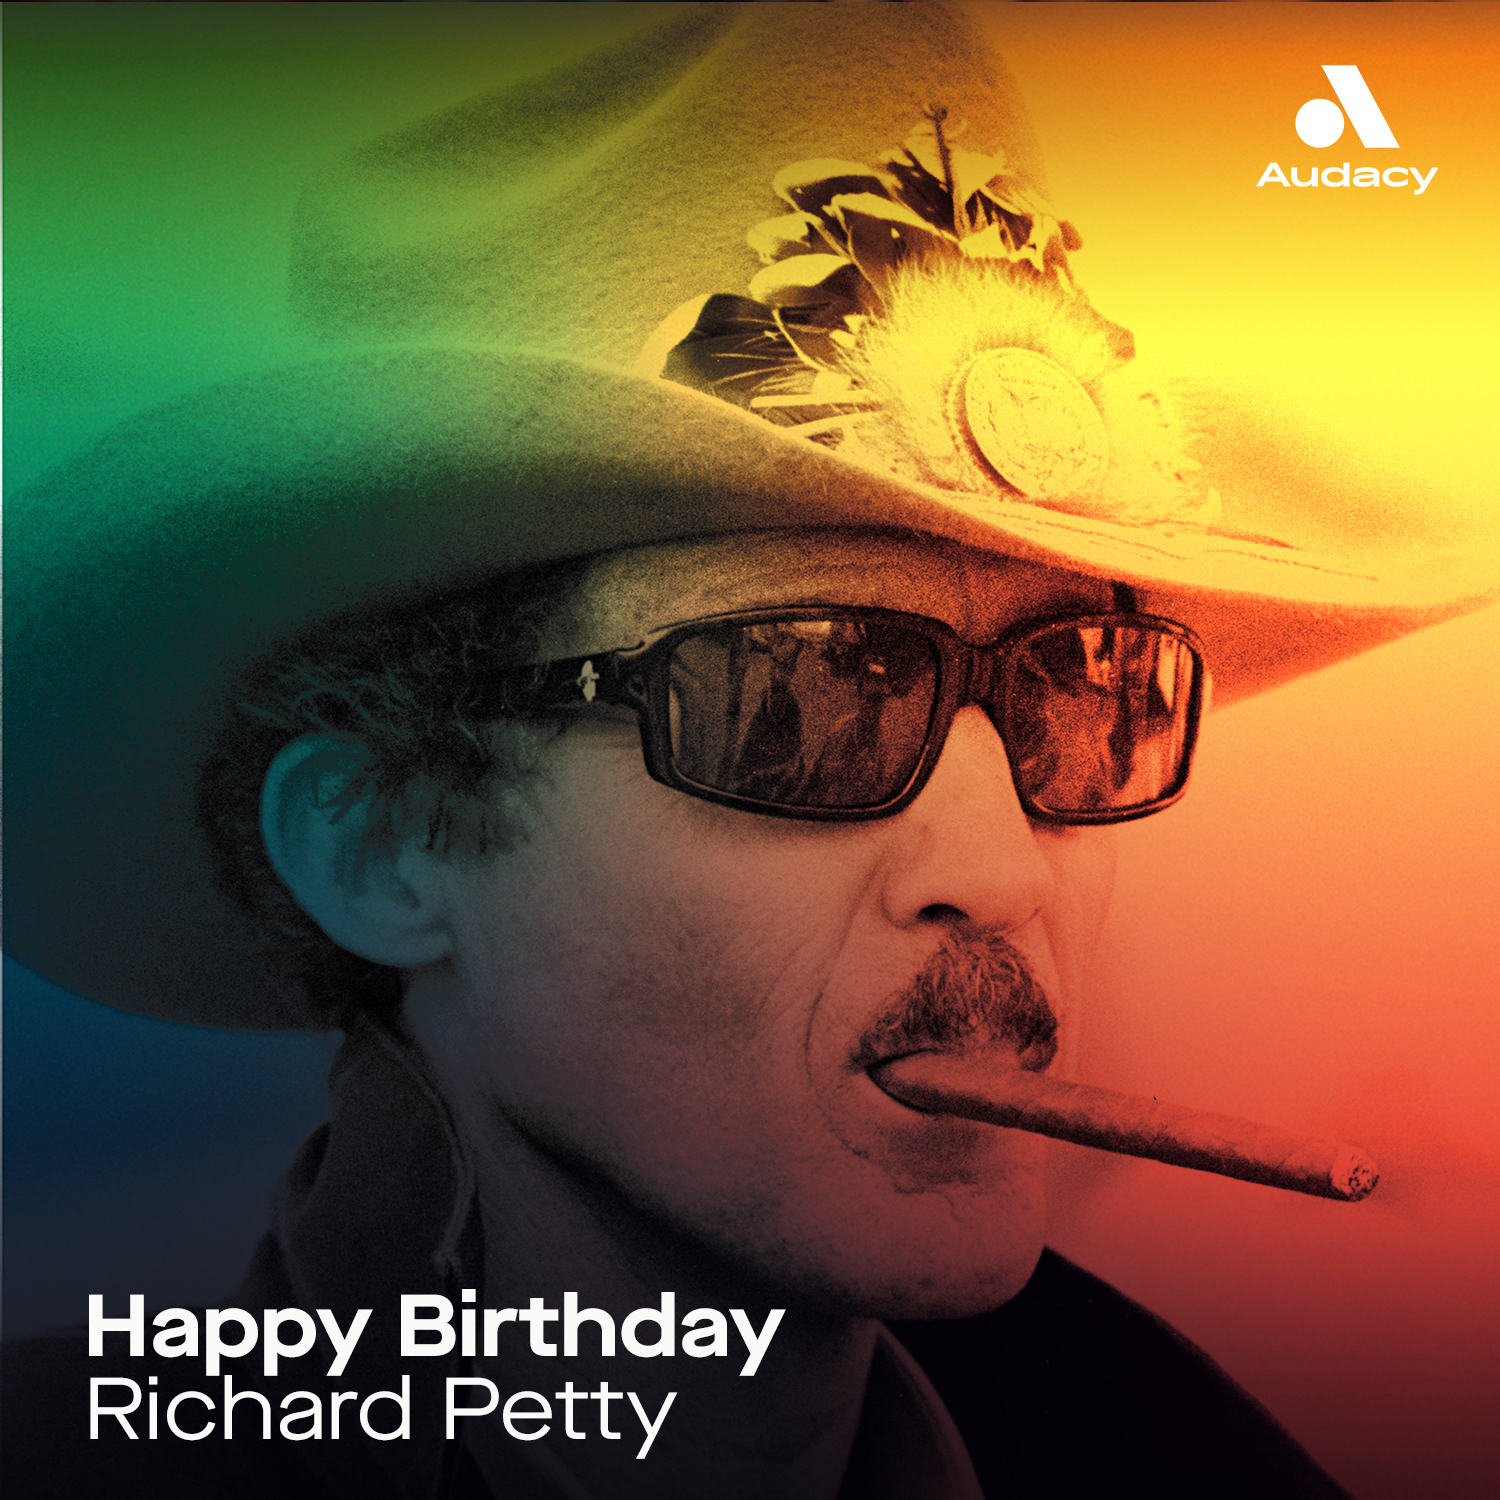 Happy Birthday to The King, Richard Petty!  